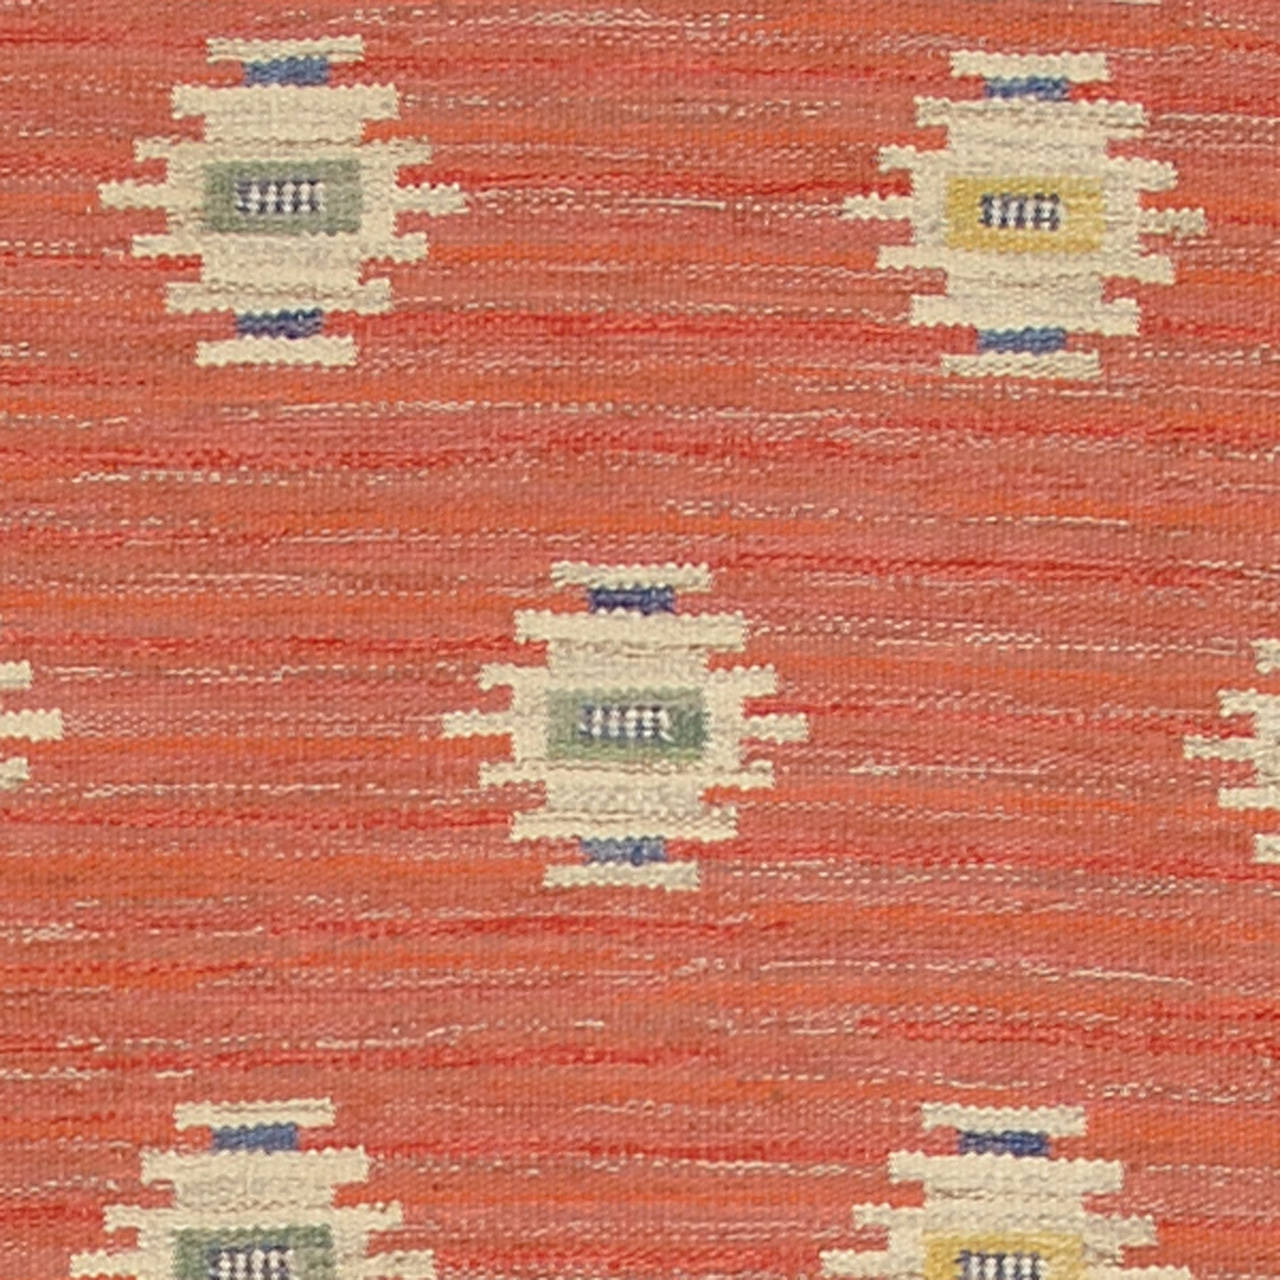 Mid 20th Century Swedish Flat-Weave Carpet
Sweden, circa 1950s
Handwoven